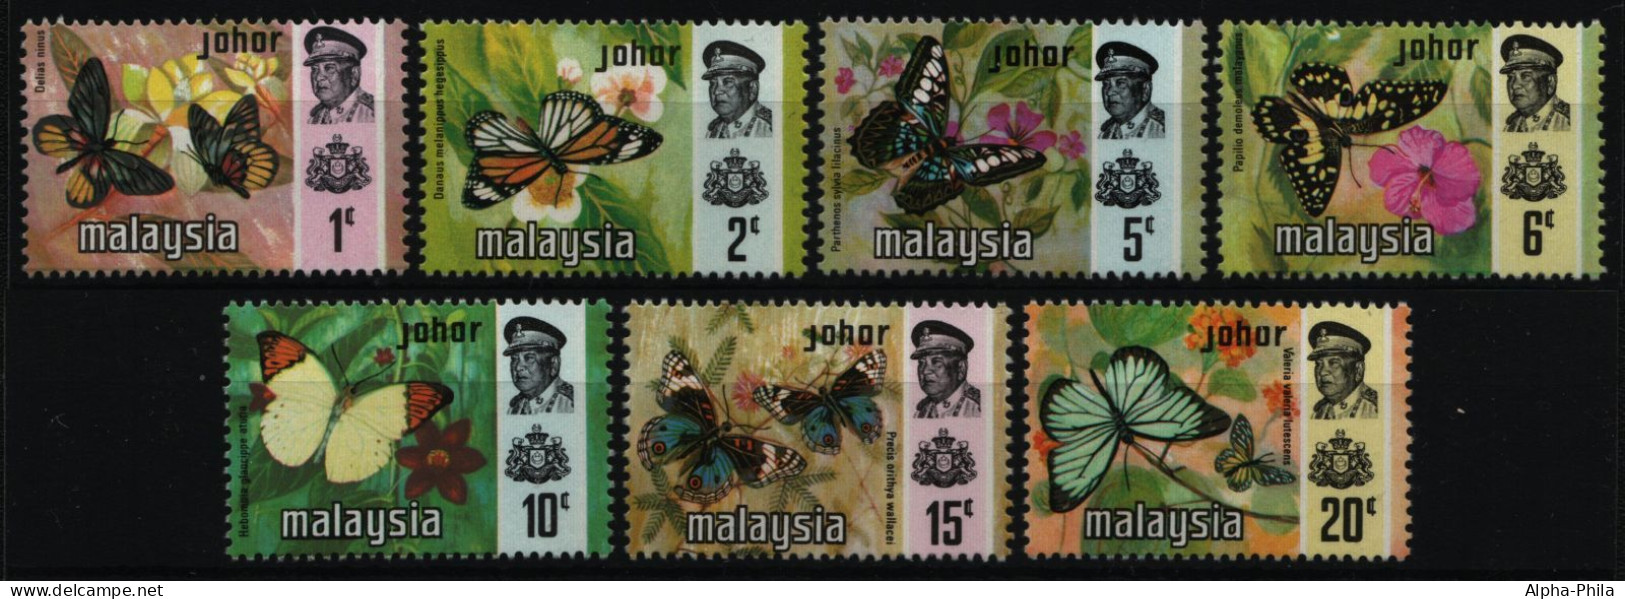 Malaya - Johore 1971 - Mi-Nr. 161-167 I ** - MNH - Schmetterlinge / Butterflies - Johore